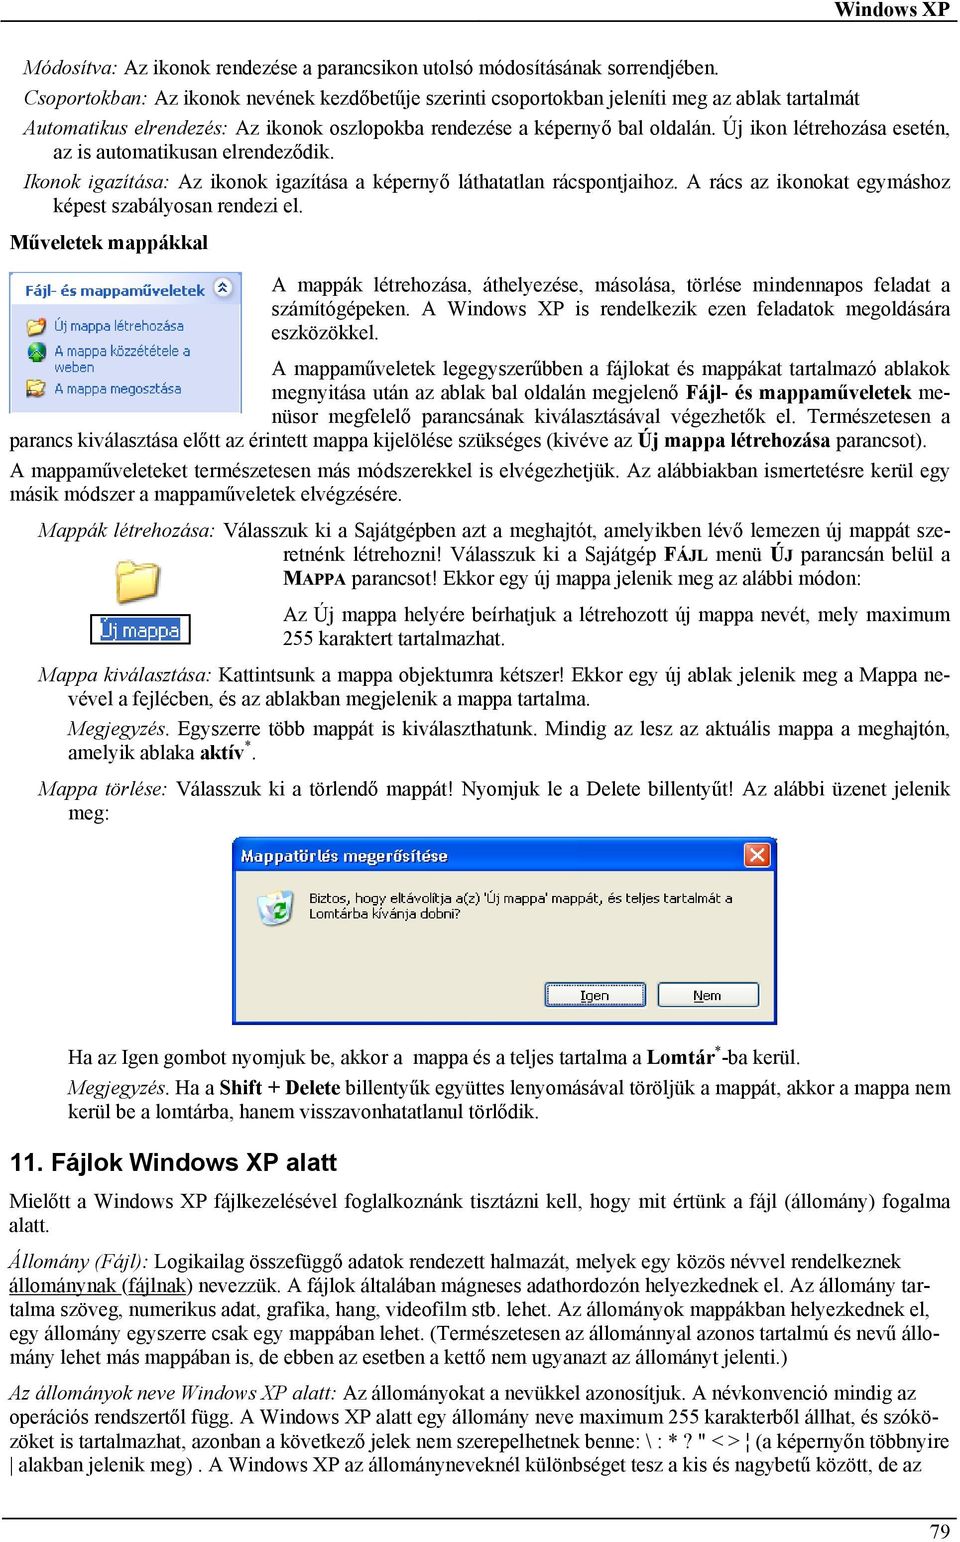 Windows XP. Tartalom - PDF Free Download